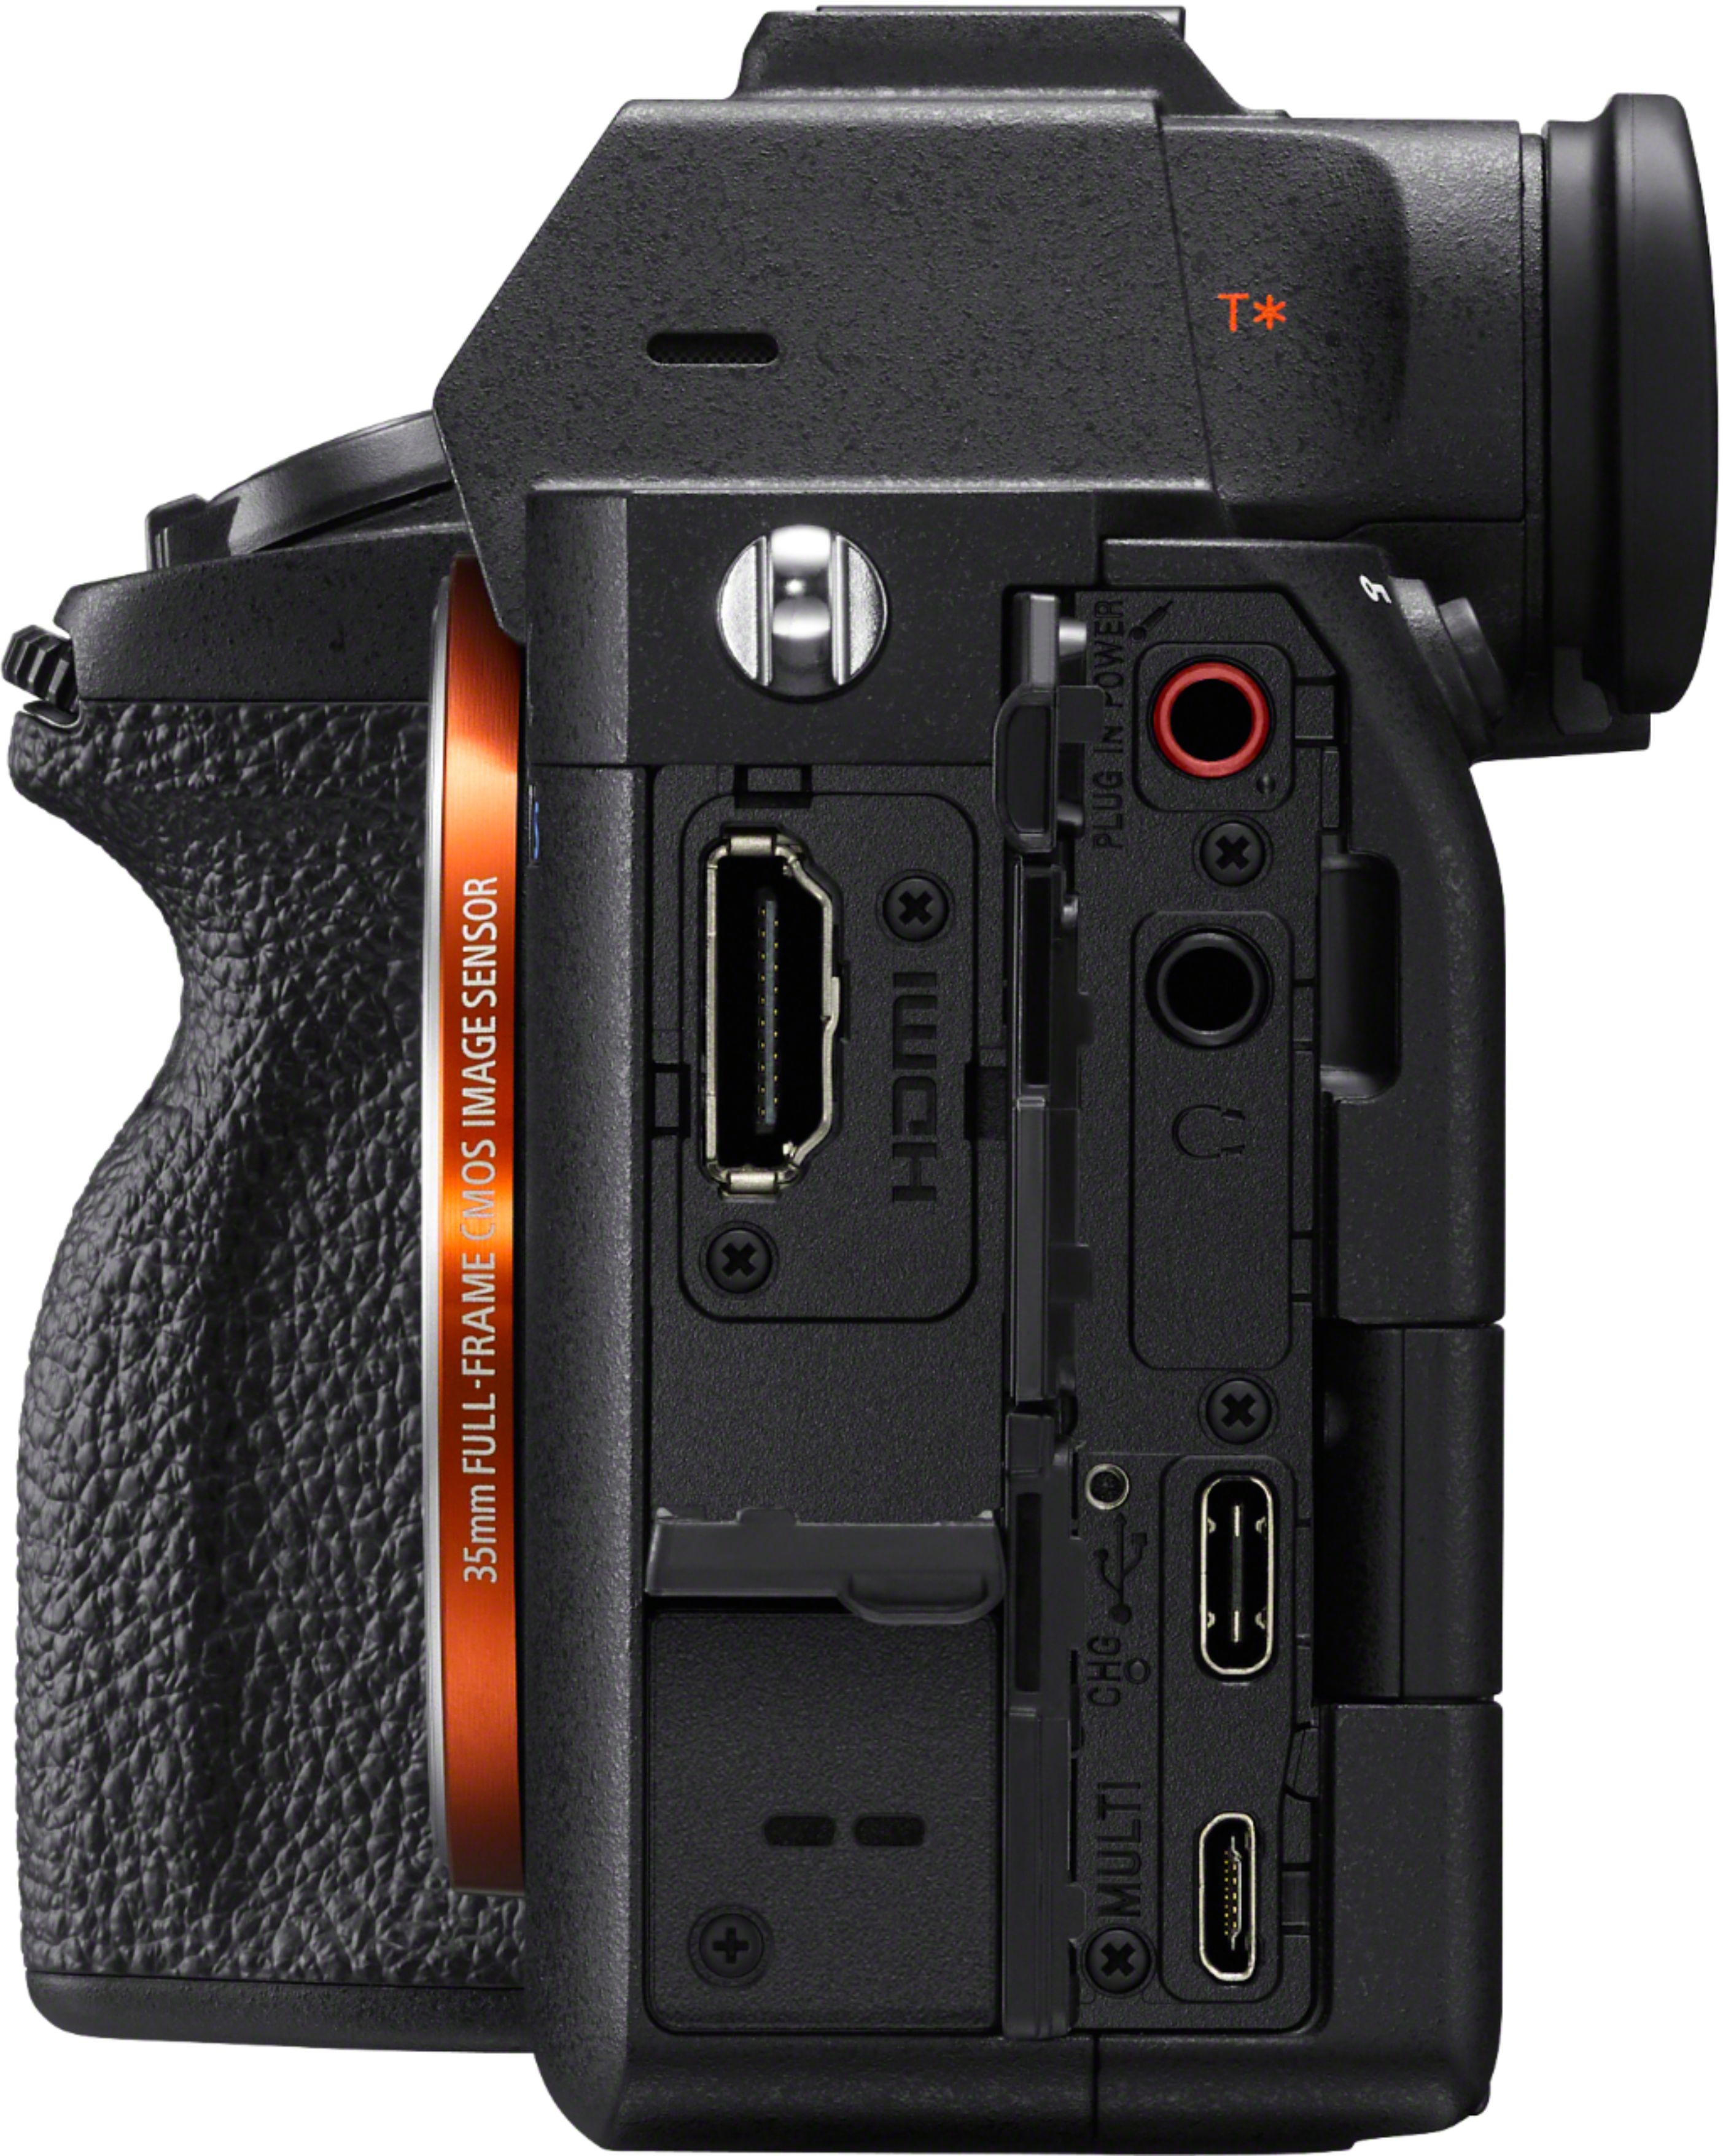 Sony Alpha 7S III Full-frame Mirrorless Camera (Body Only) Black 